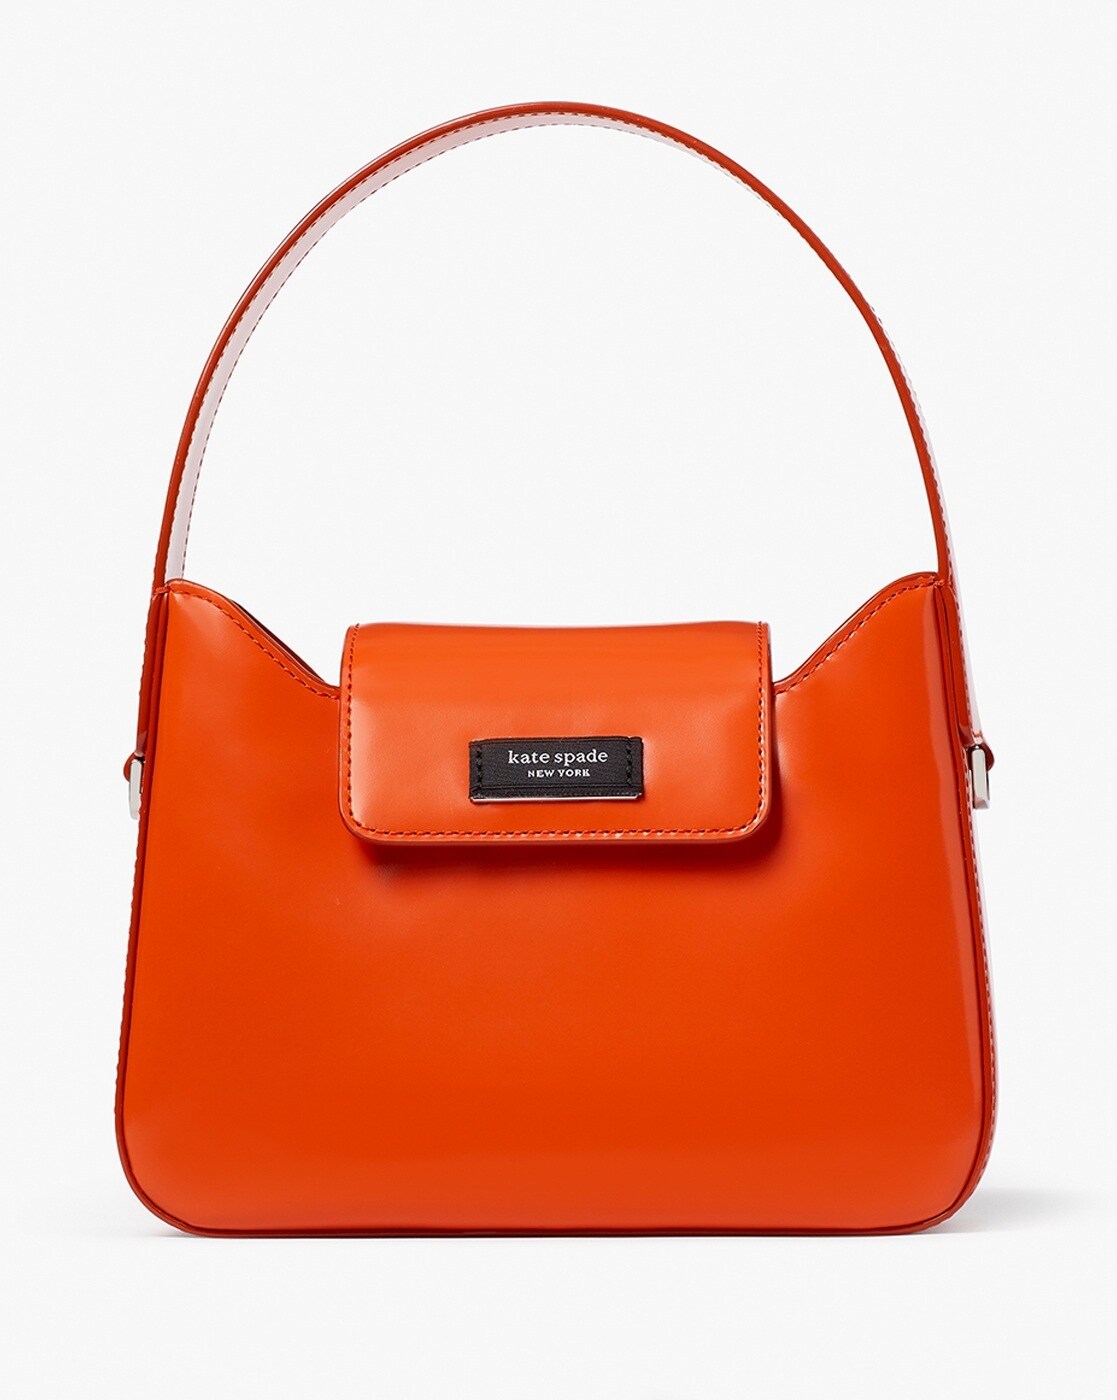 Kate Spade Alexia Clementine Orange Multi Clutch Crossbody Bag Novelty